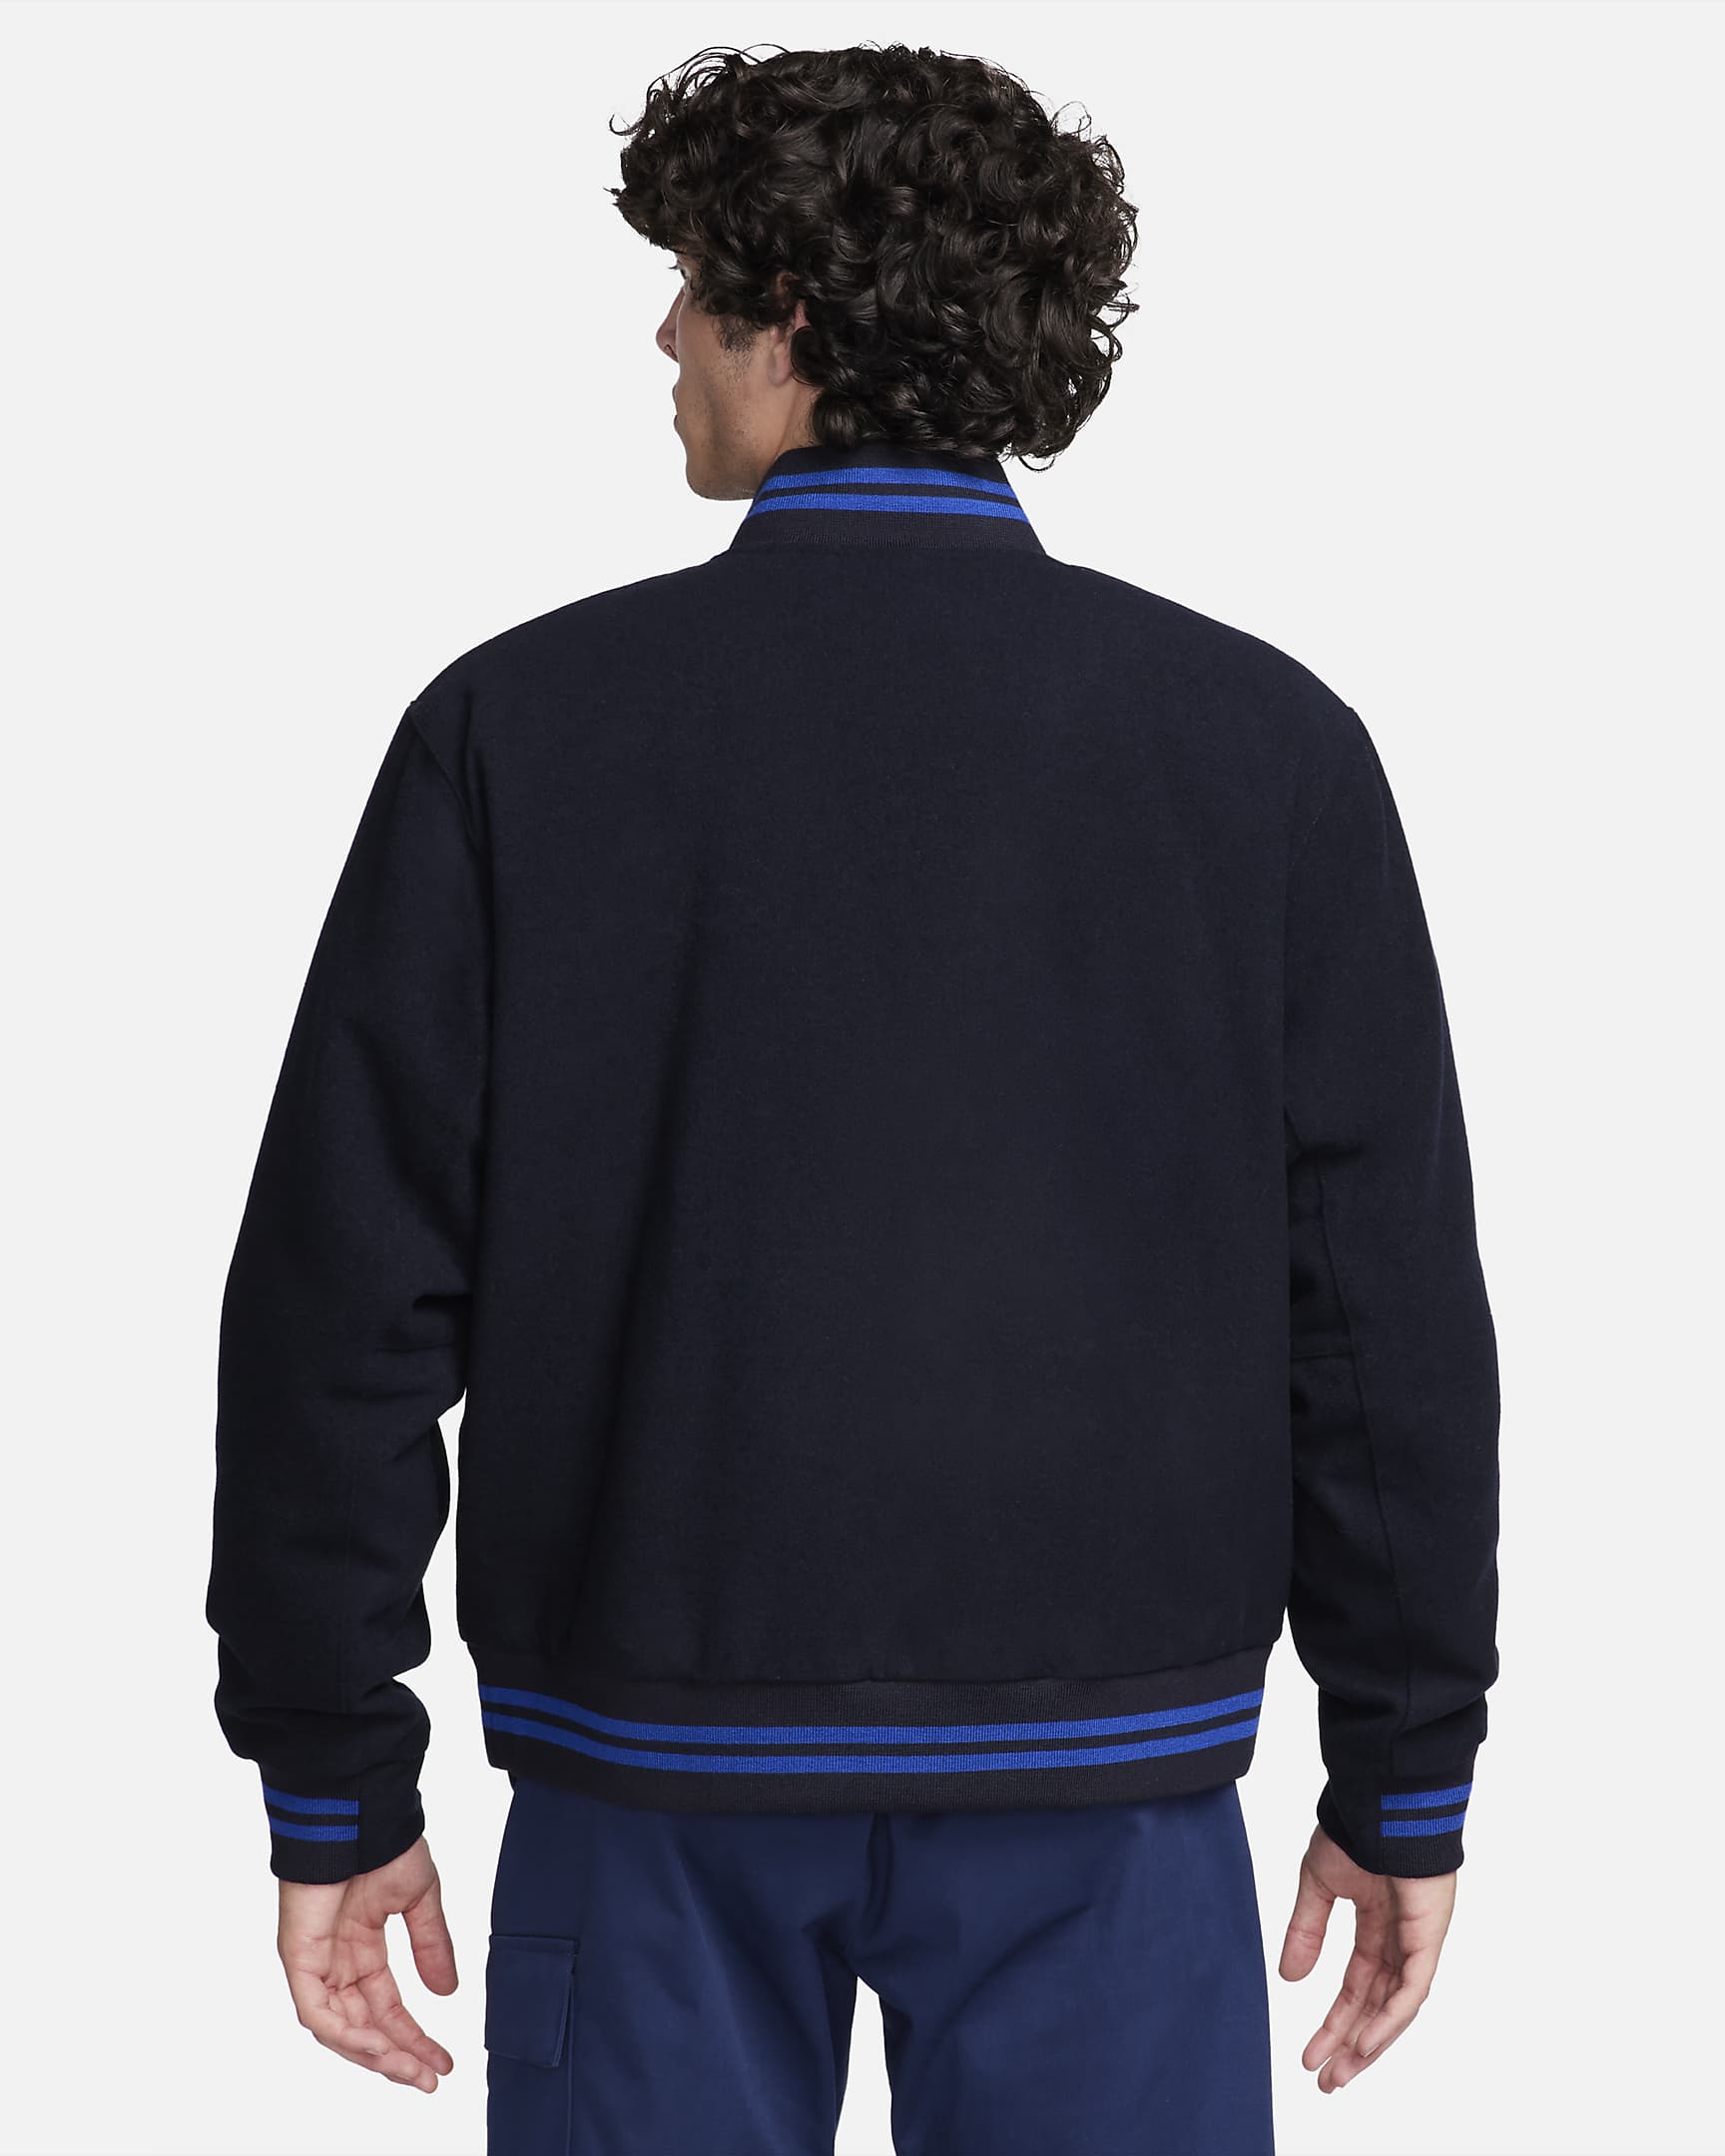 Chelsea F.C. Men's Nike Football Varsity Jacket. Nike SE